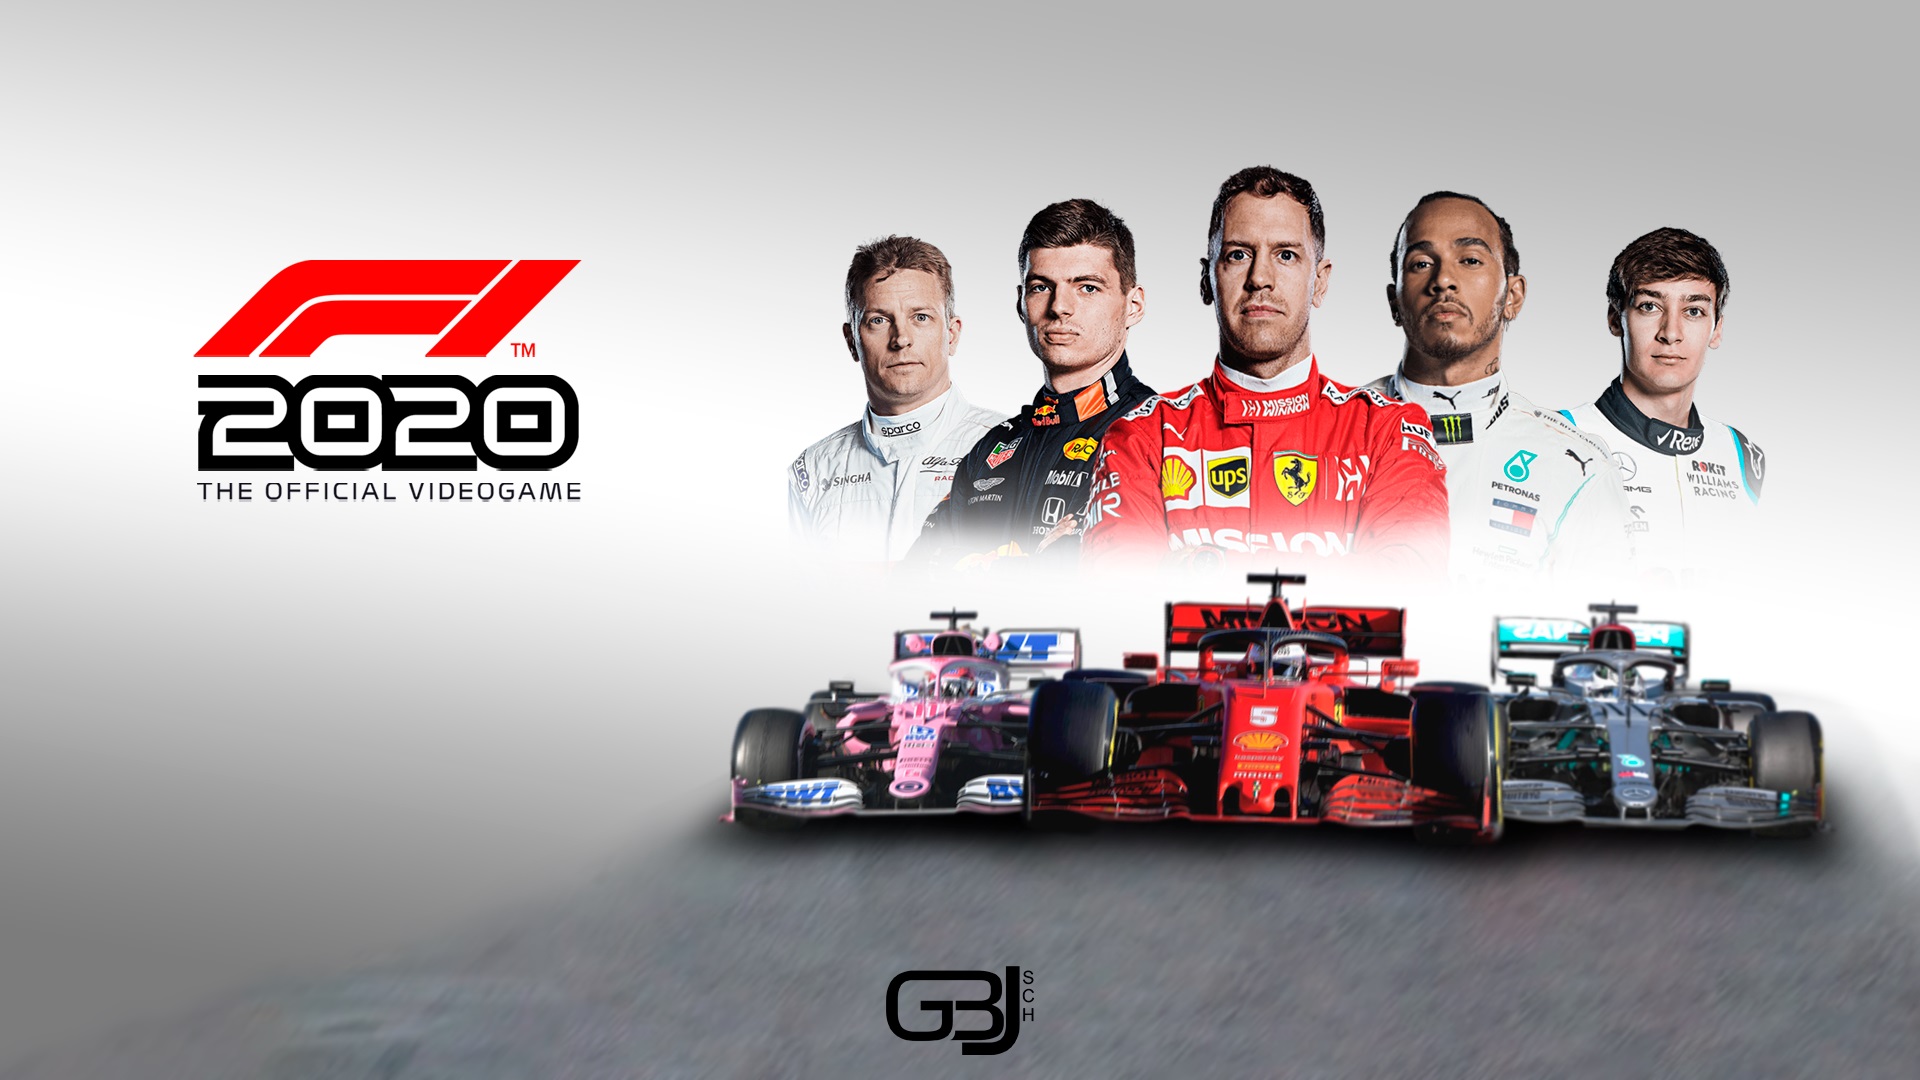 F1 23 игра. Формула 1 2020 игра. F1 2020 (Video game). F1 2020 игра обложка. Формула 1 логотип.